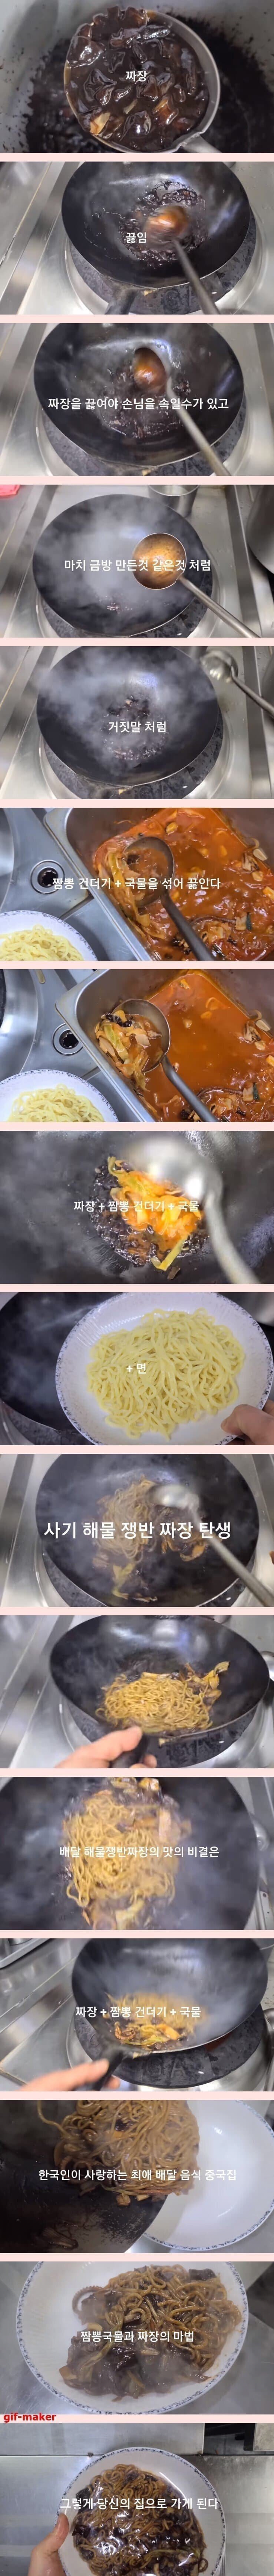 Chinese restaurant tray jjajang recipe is a secret.jpg